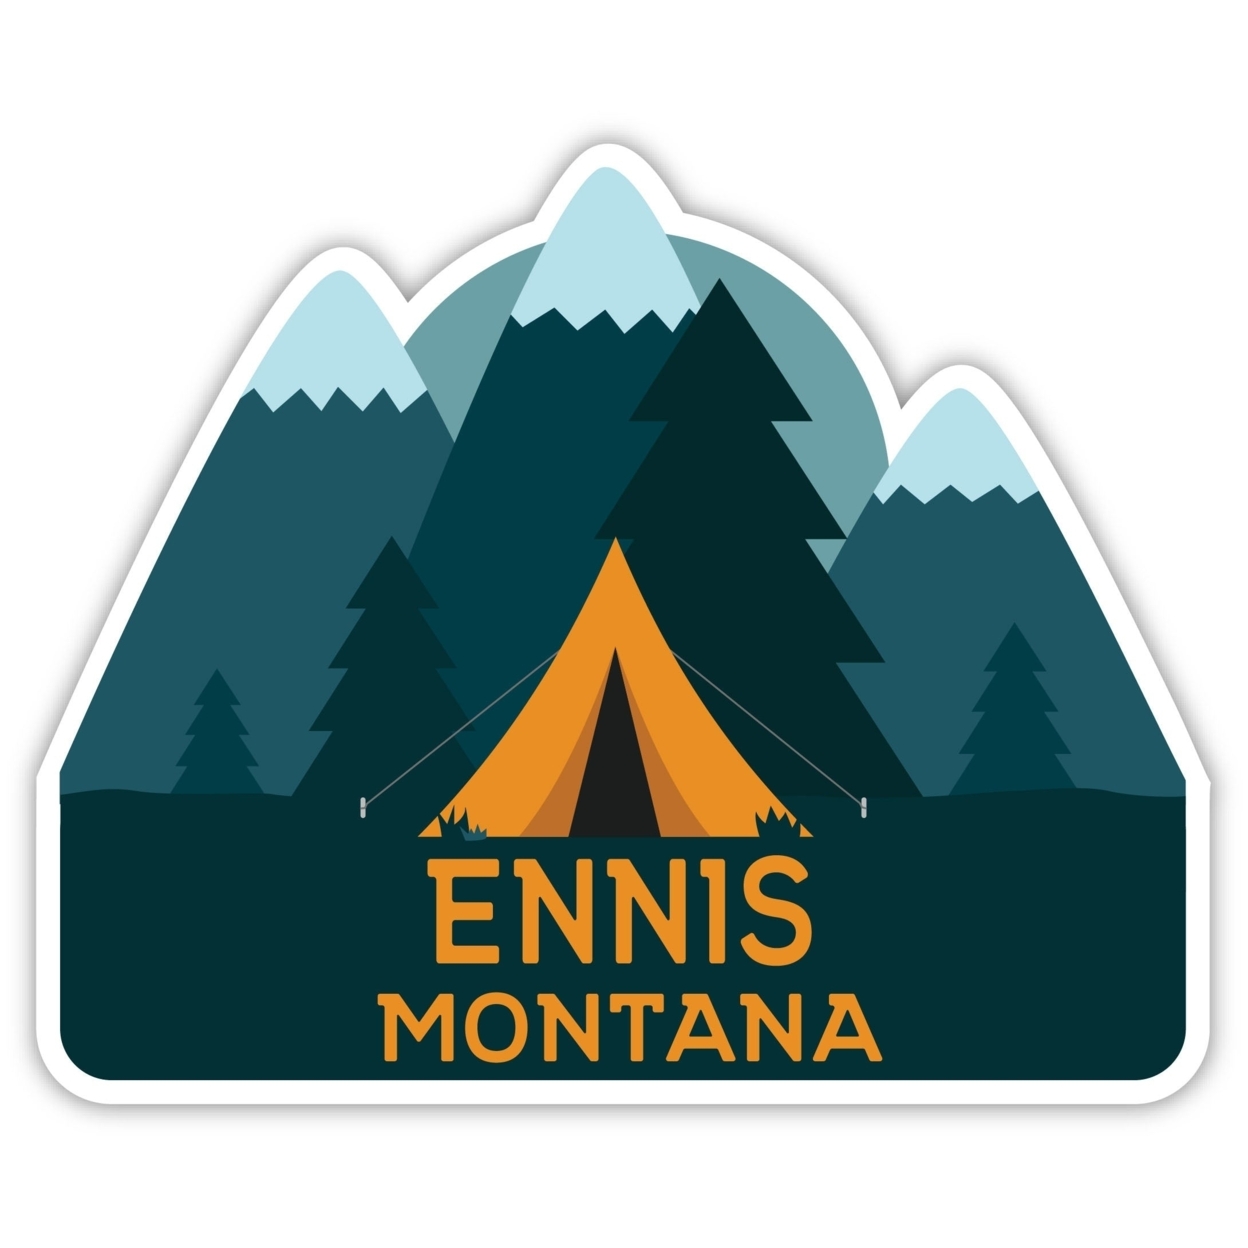 Ennis Montana Souvenir Decorative Stickers (Choose Theme And Size) - 4-Pack, 4-Inch, Tent